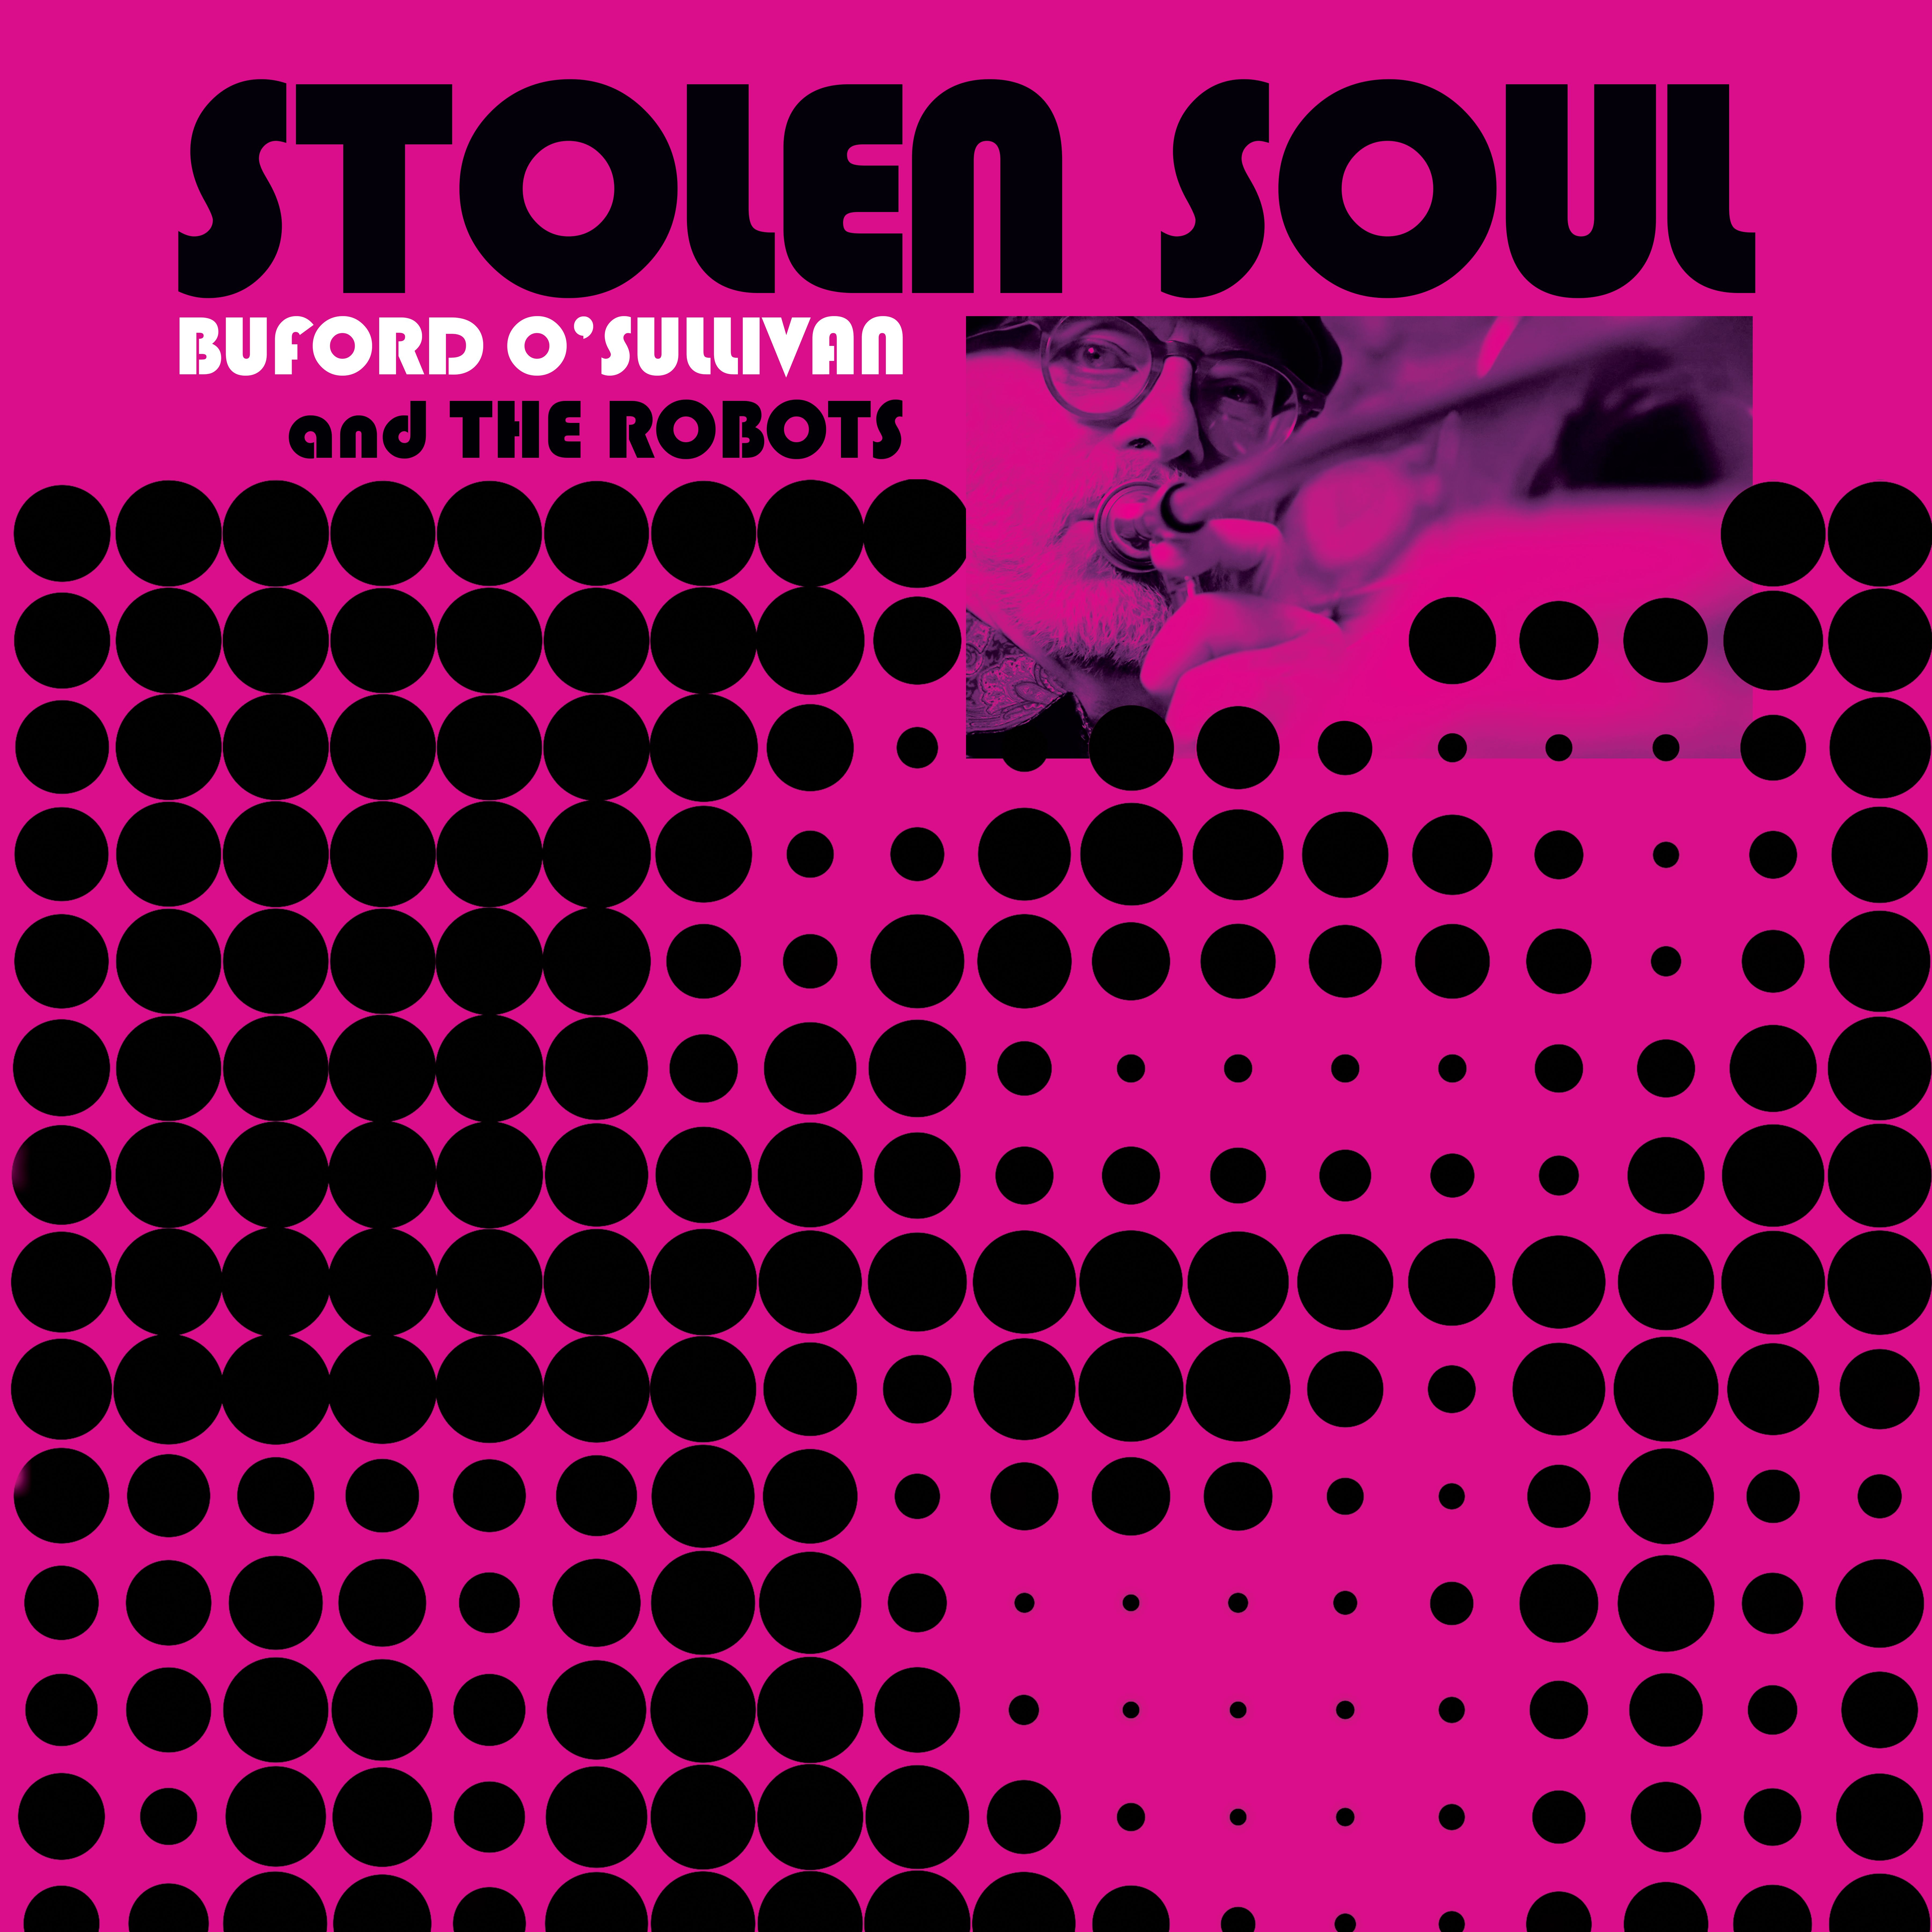 Buford O'Sullivan/STOLEN SOUL (CLR) LP